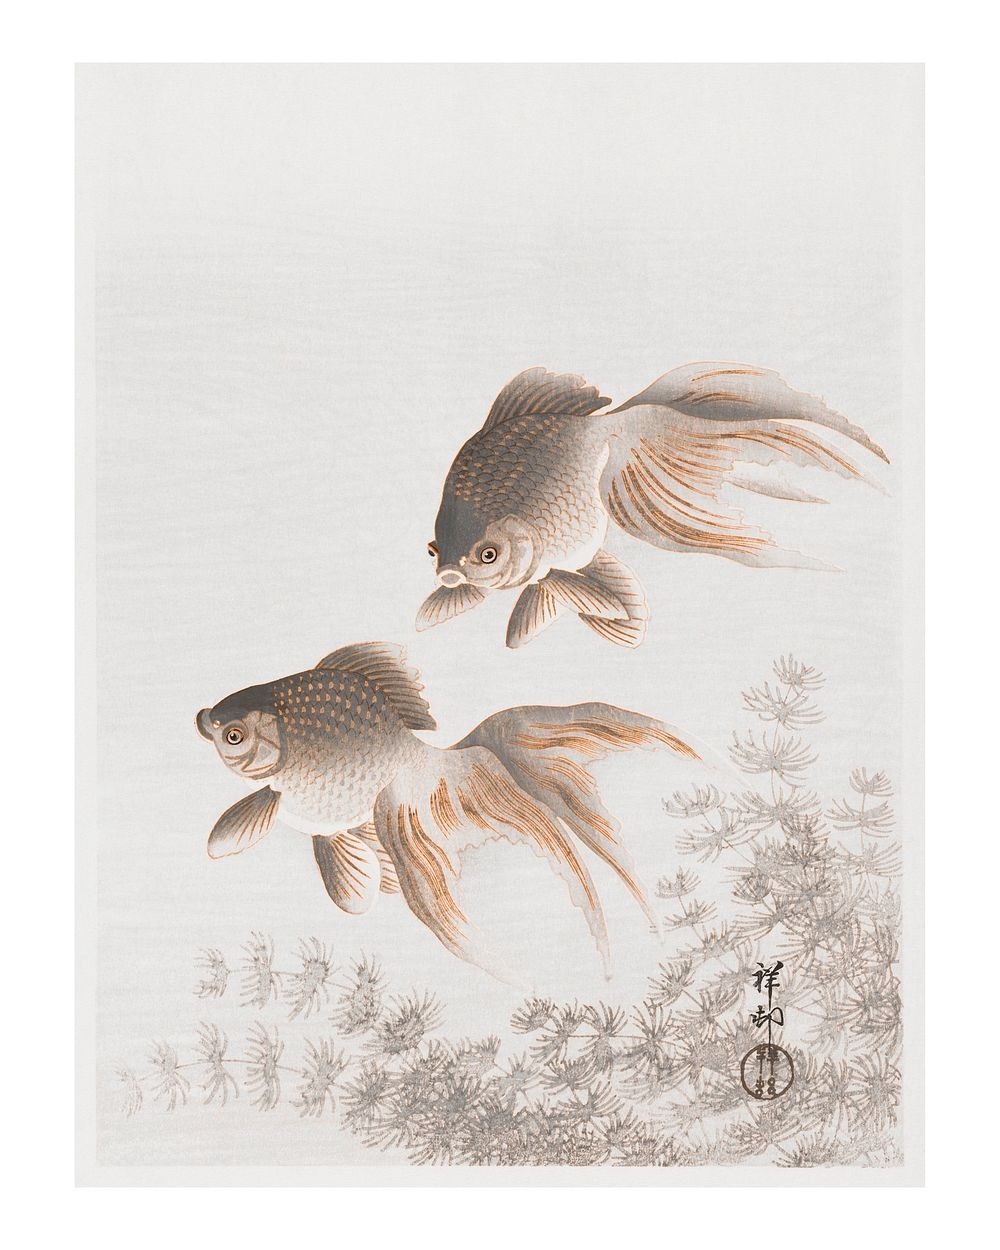 Veiltail goldfish vintage illustration wall art print and poster design remix from original artwork.